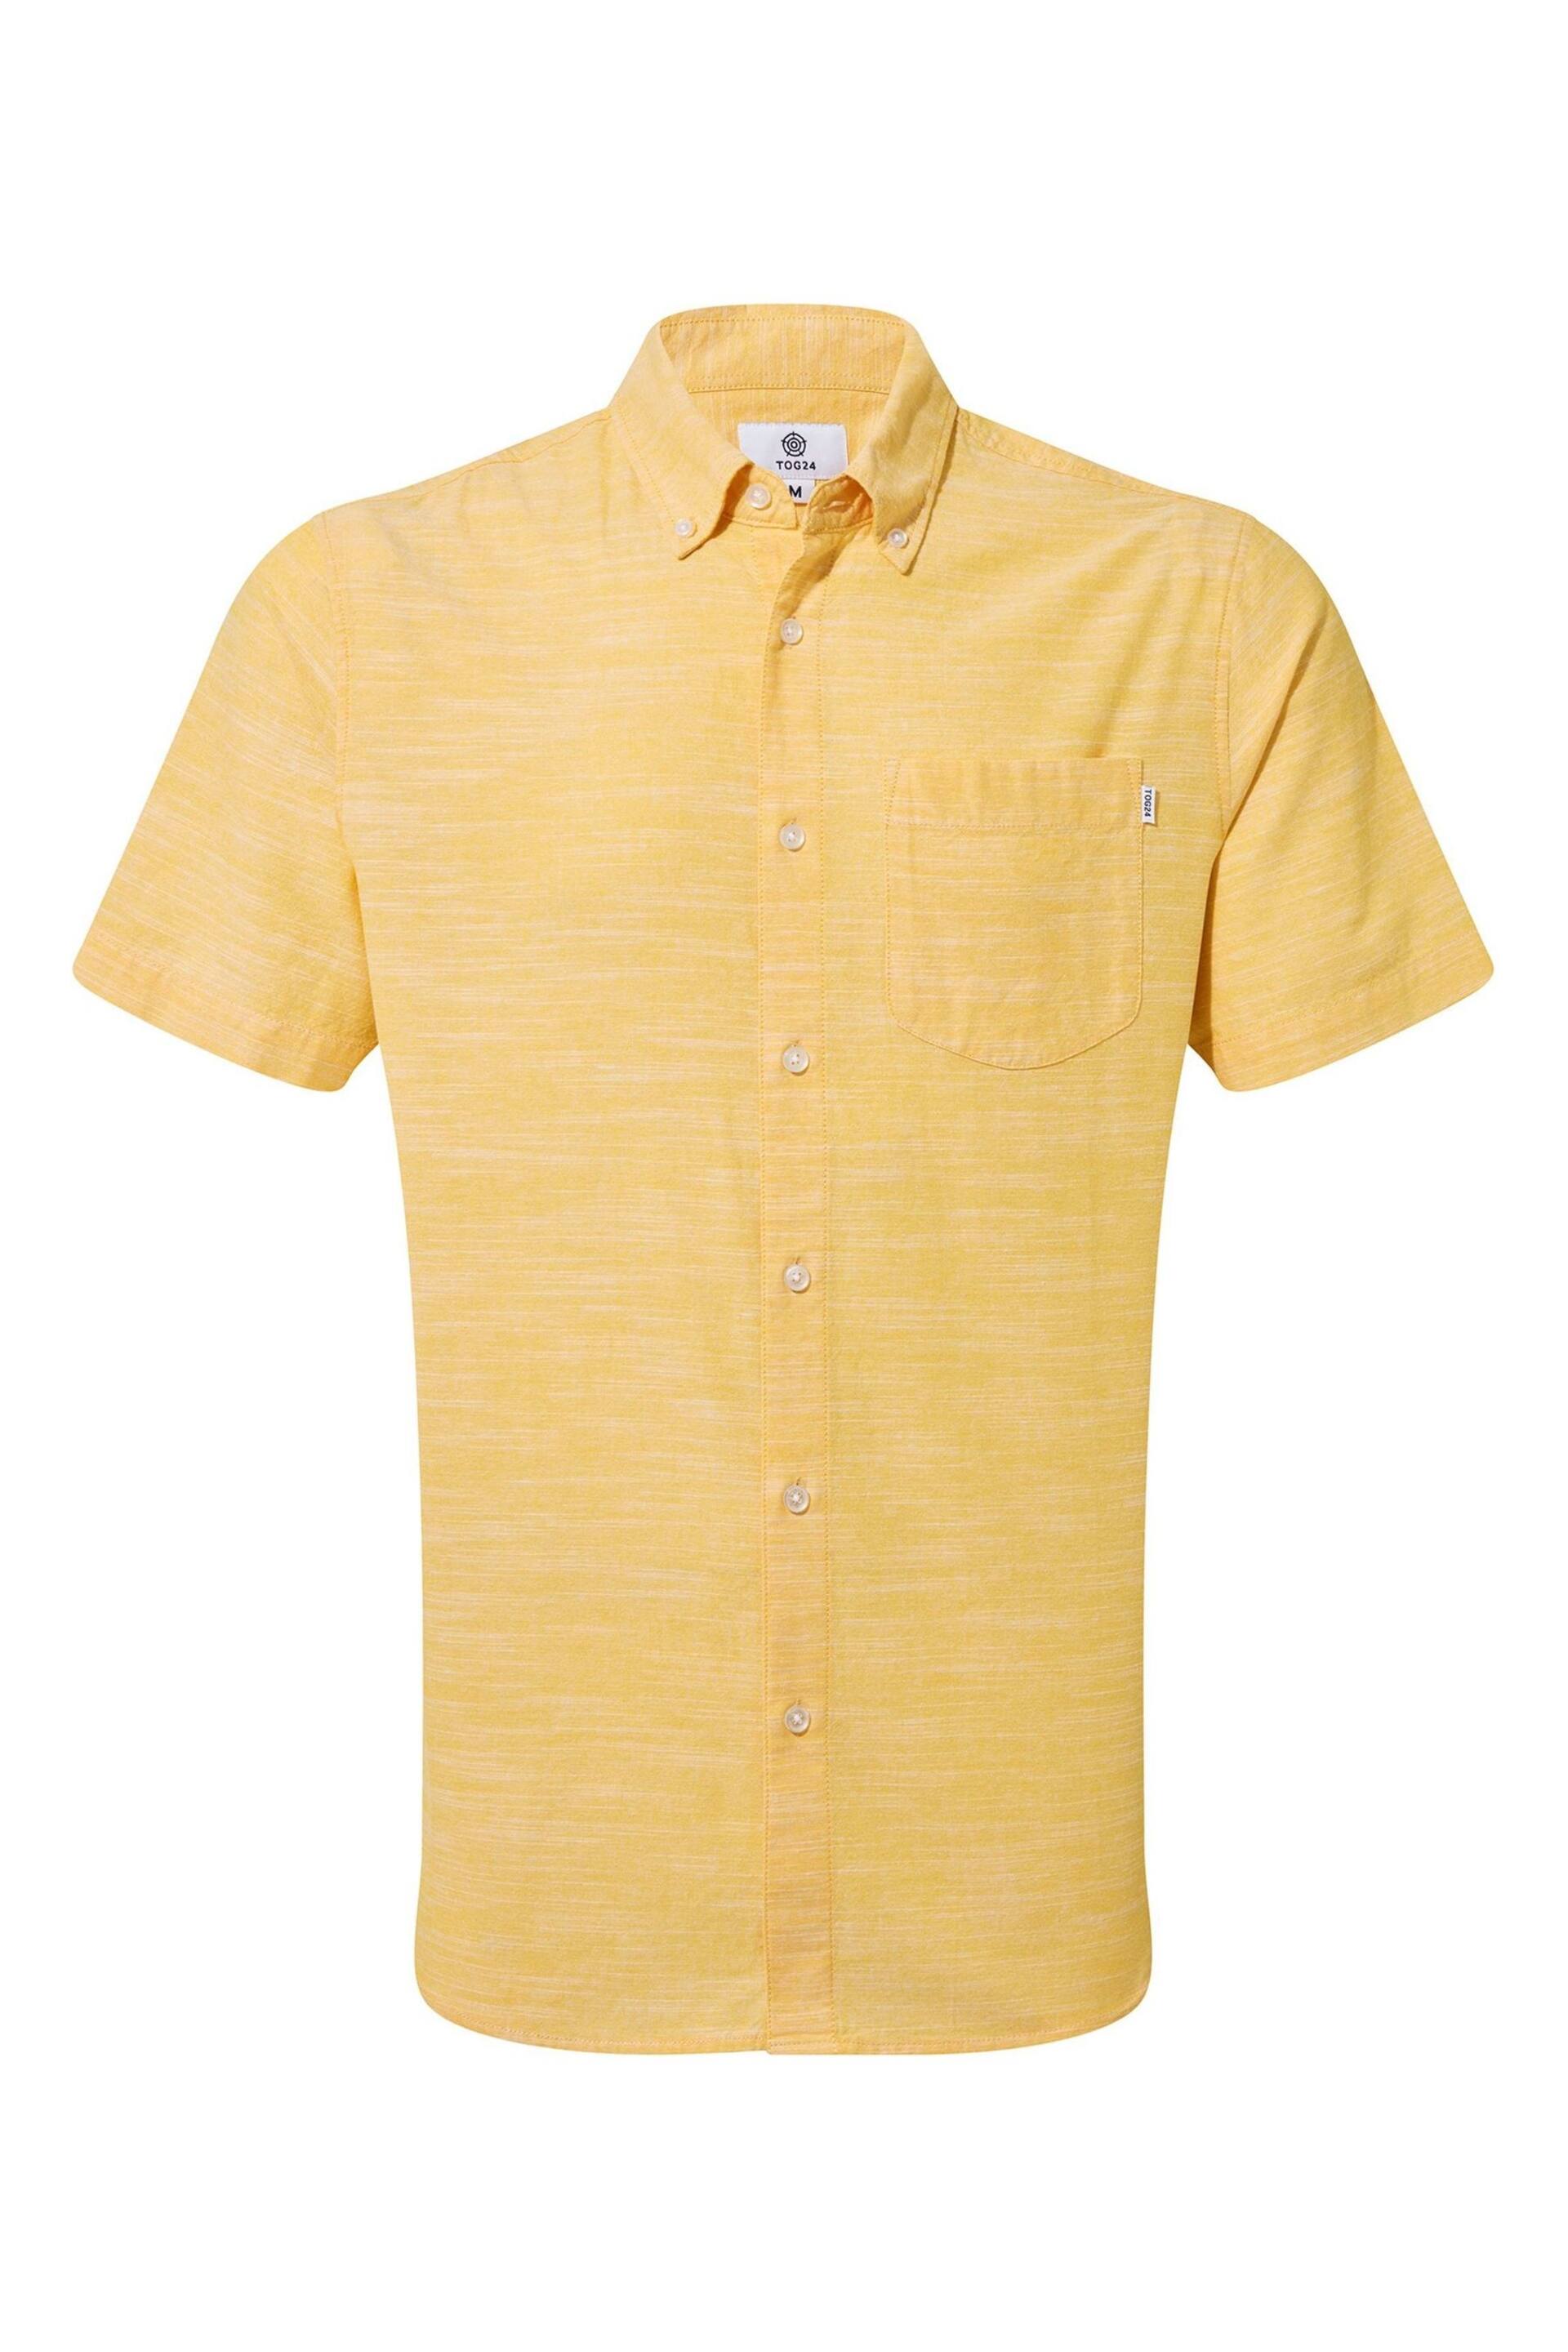 Tog 24 Yellow Dwaine Short Sleeve Shirt - Image 8 of 8